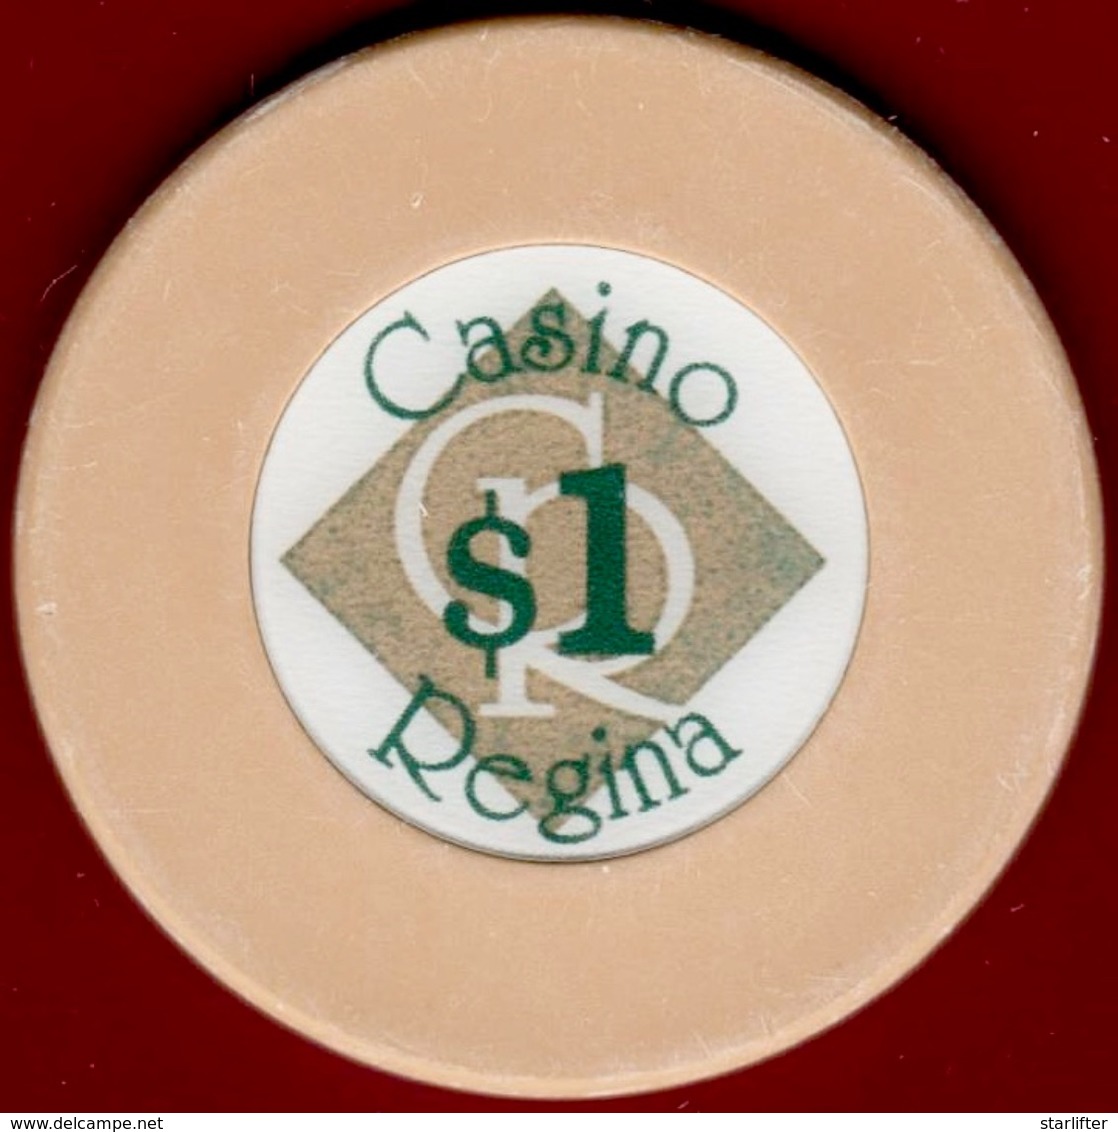 $1 Casino Chip. Casino Regina, Regina, Saskatchewan, Canada. K96. - Casino